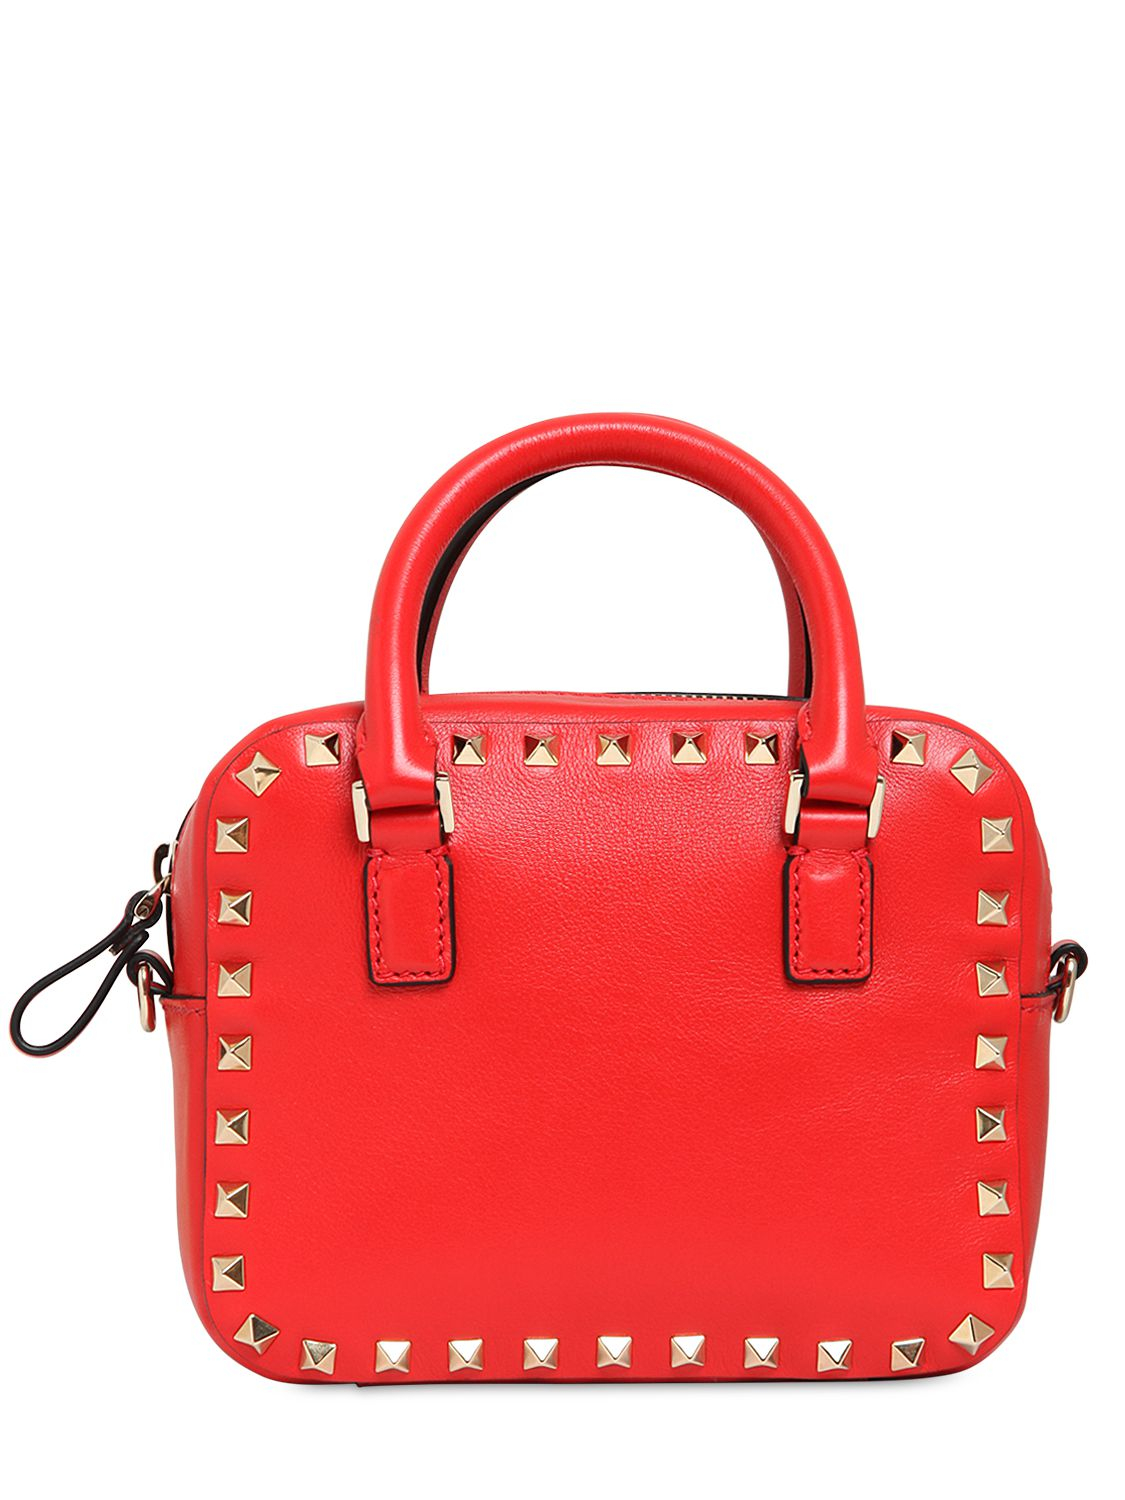 Lyst - Valentino Rockstud Leather Shoulder Bag in Red